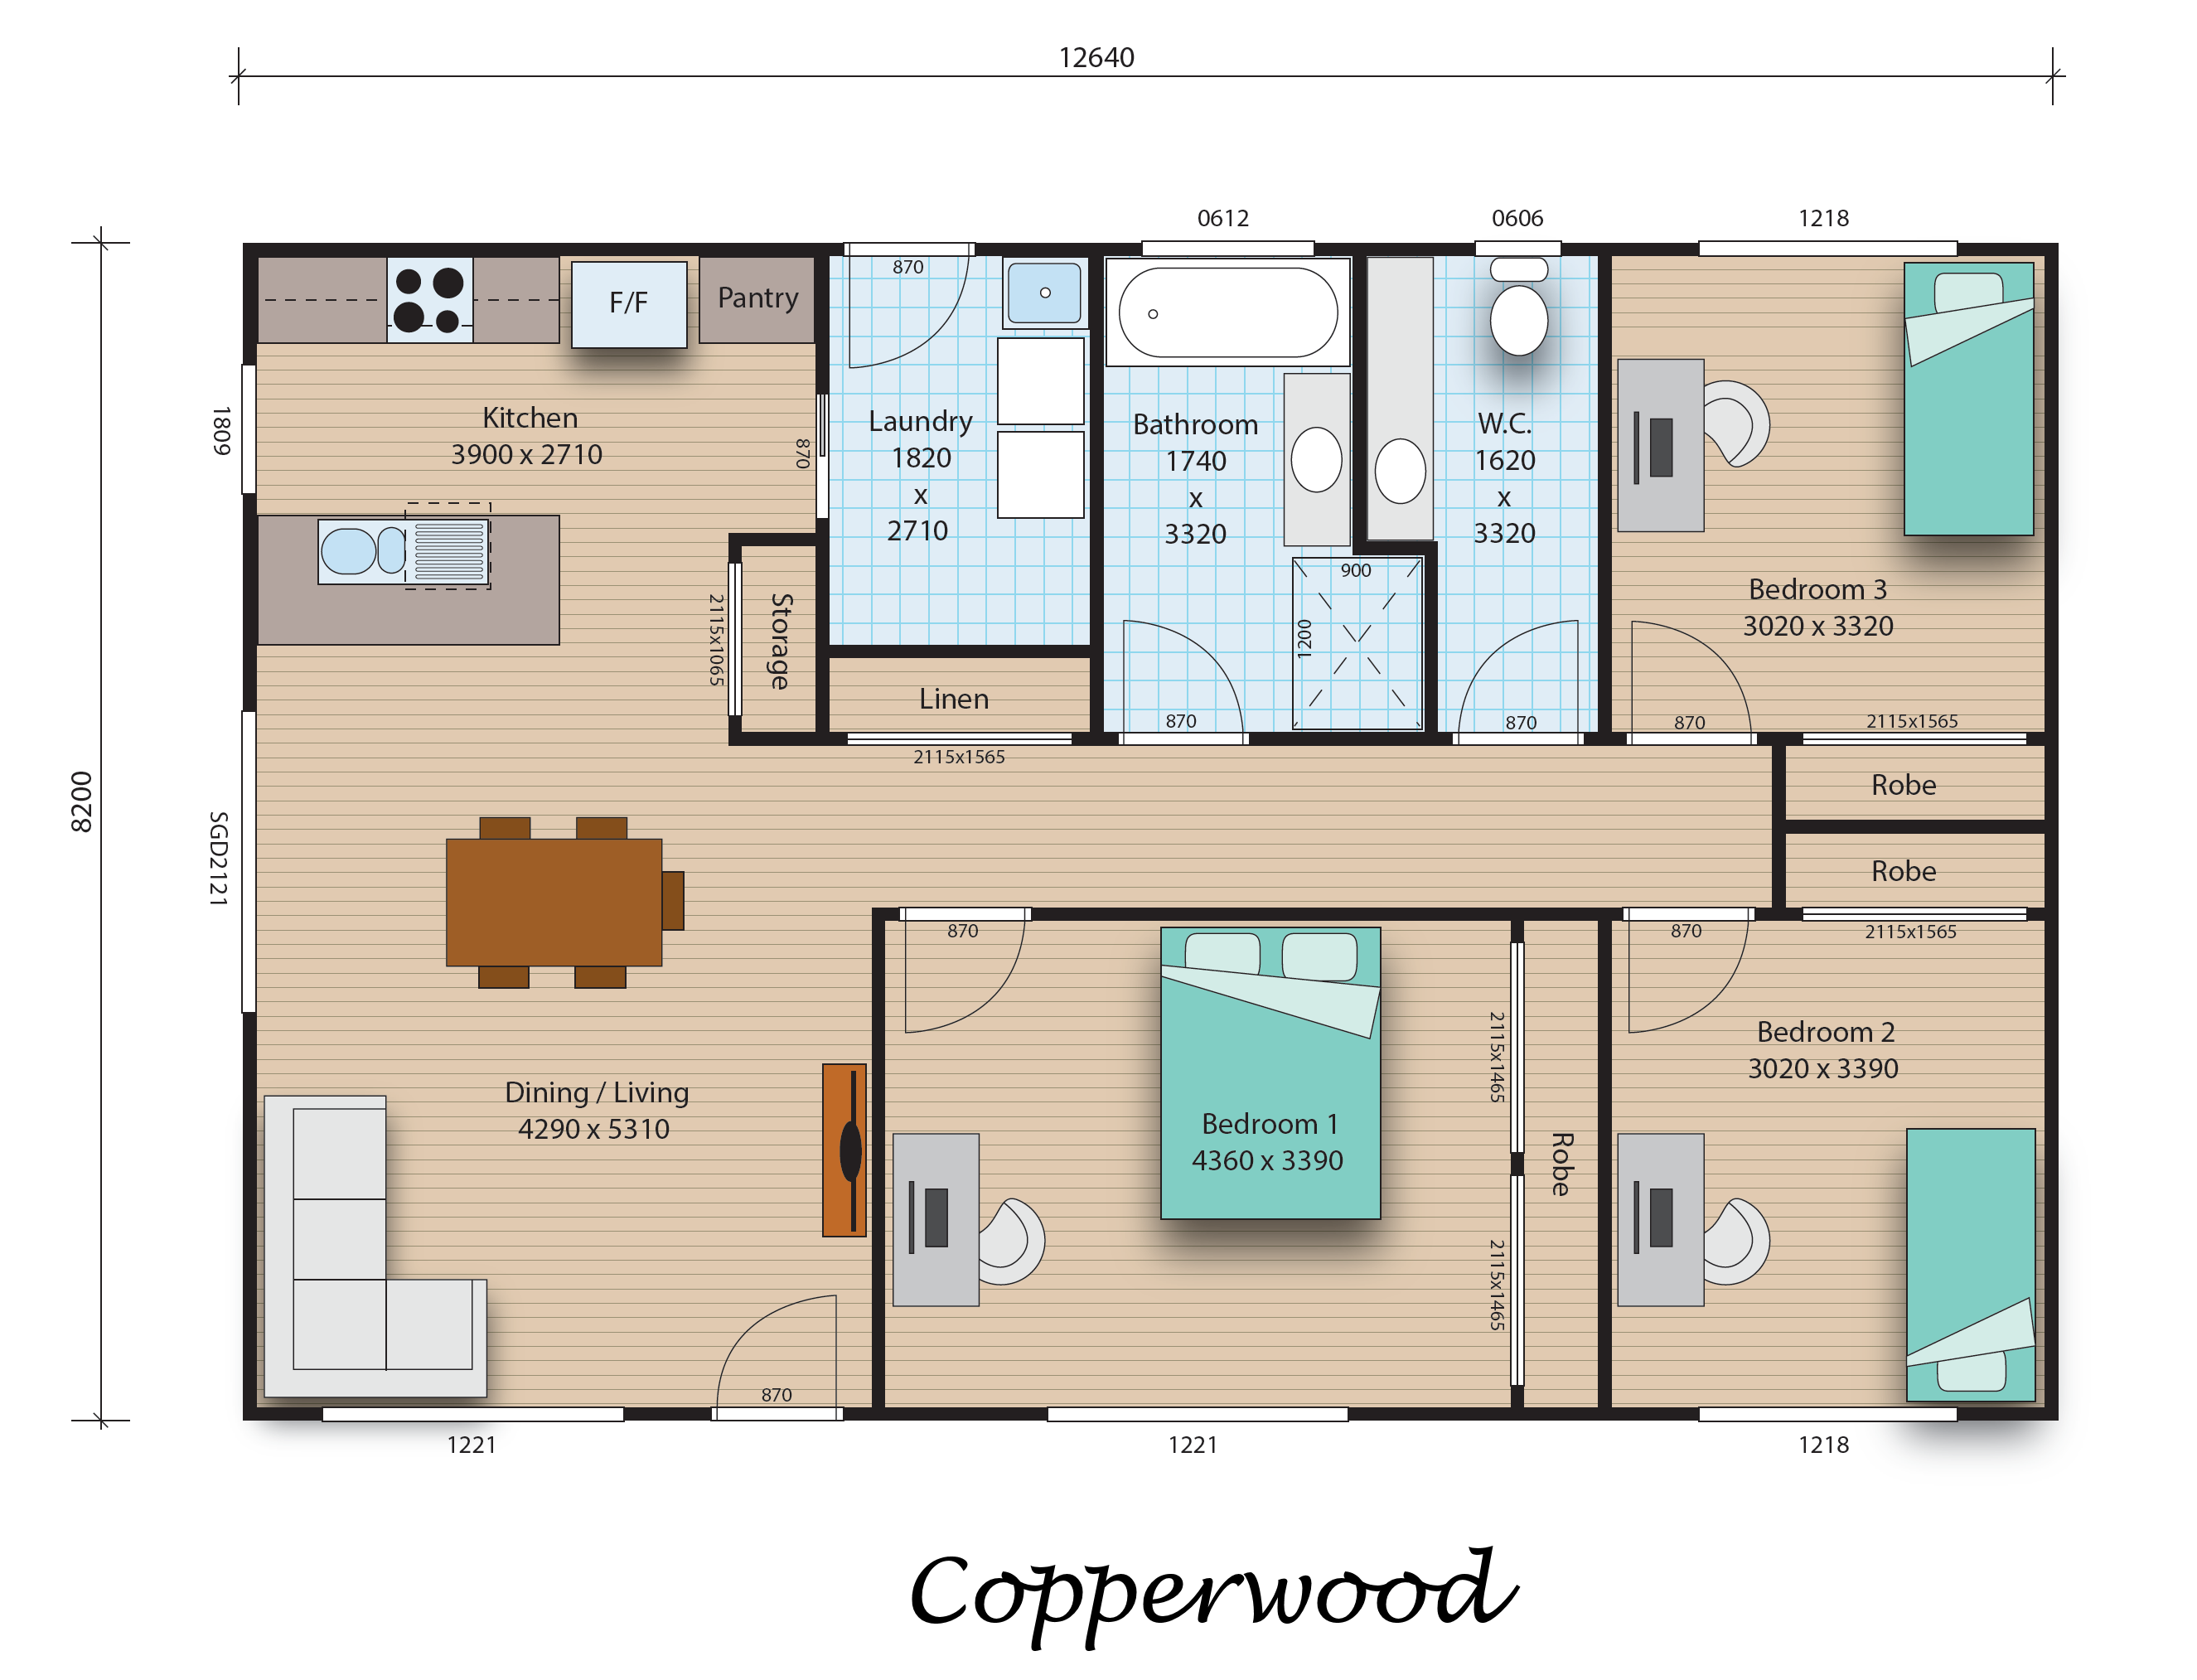 Copperwood floorplan image